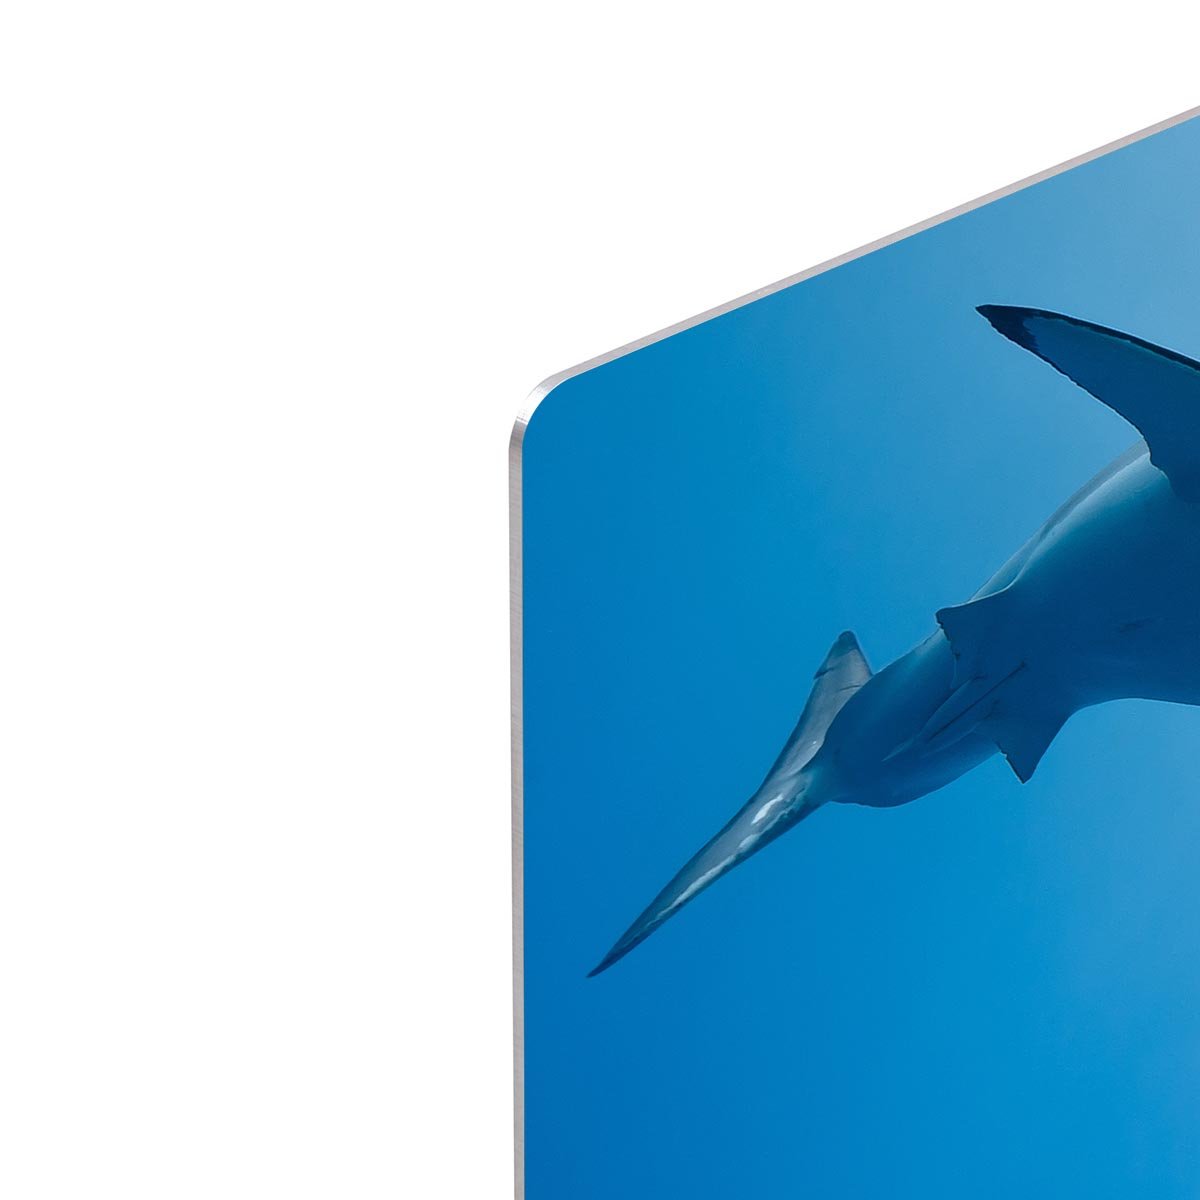 Great white shark Guadalupe Island HD Metal Print